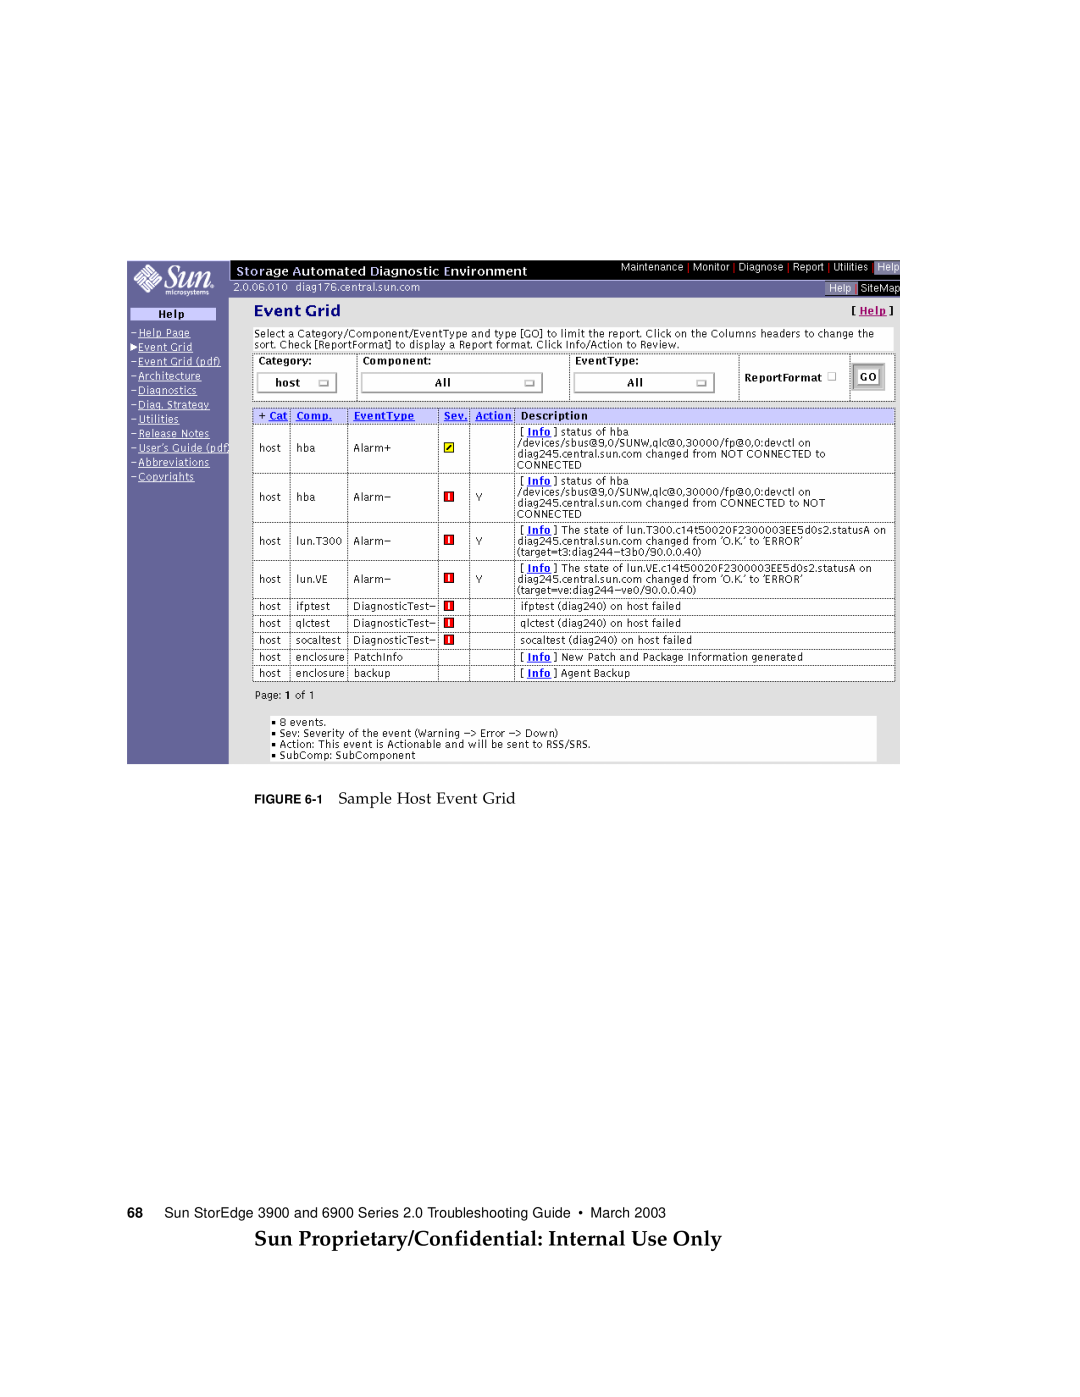 Sun Microsystems 3900, 6900 manual Sun Proprietary/Confidential Internal Use Only, 1 Sample Host Event Grid 